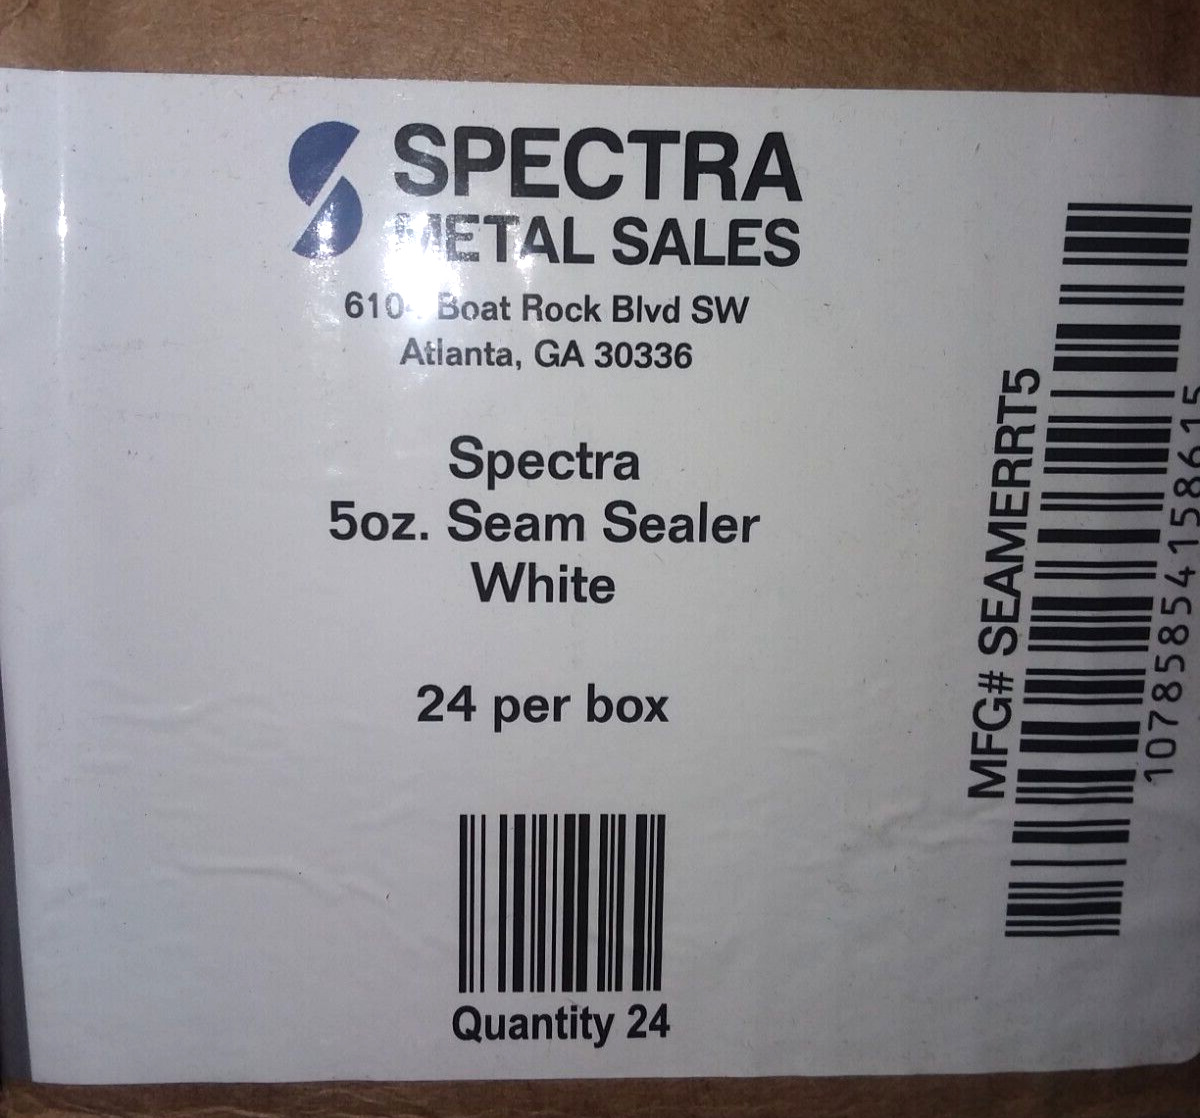 SPECTRA Professional Gutter Repair Seam Sealer  White - 5 Oz Each  Case 24 Pack)